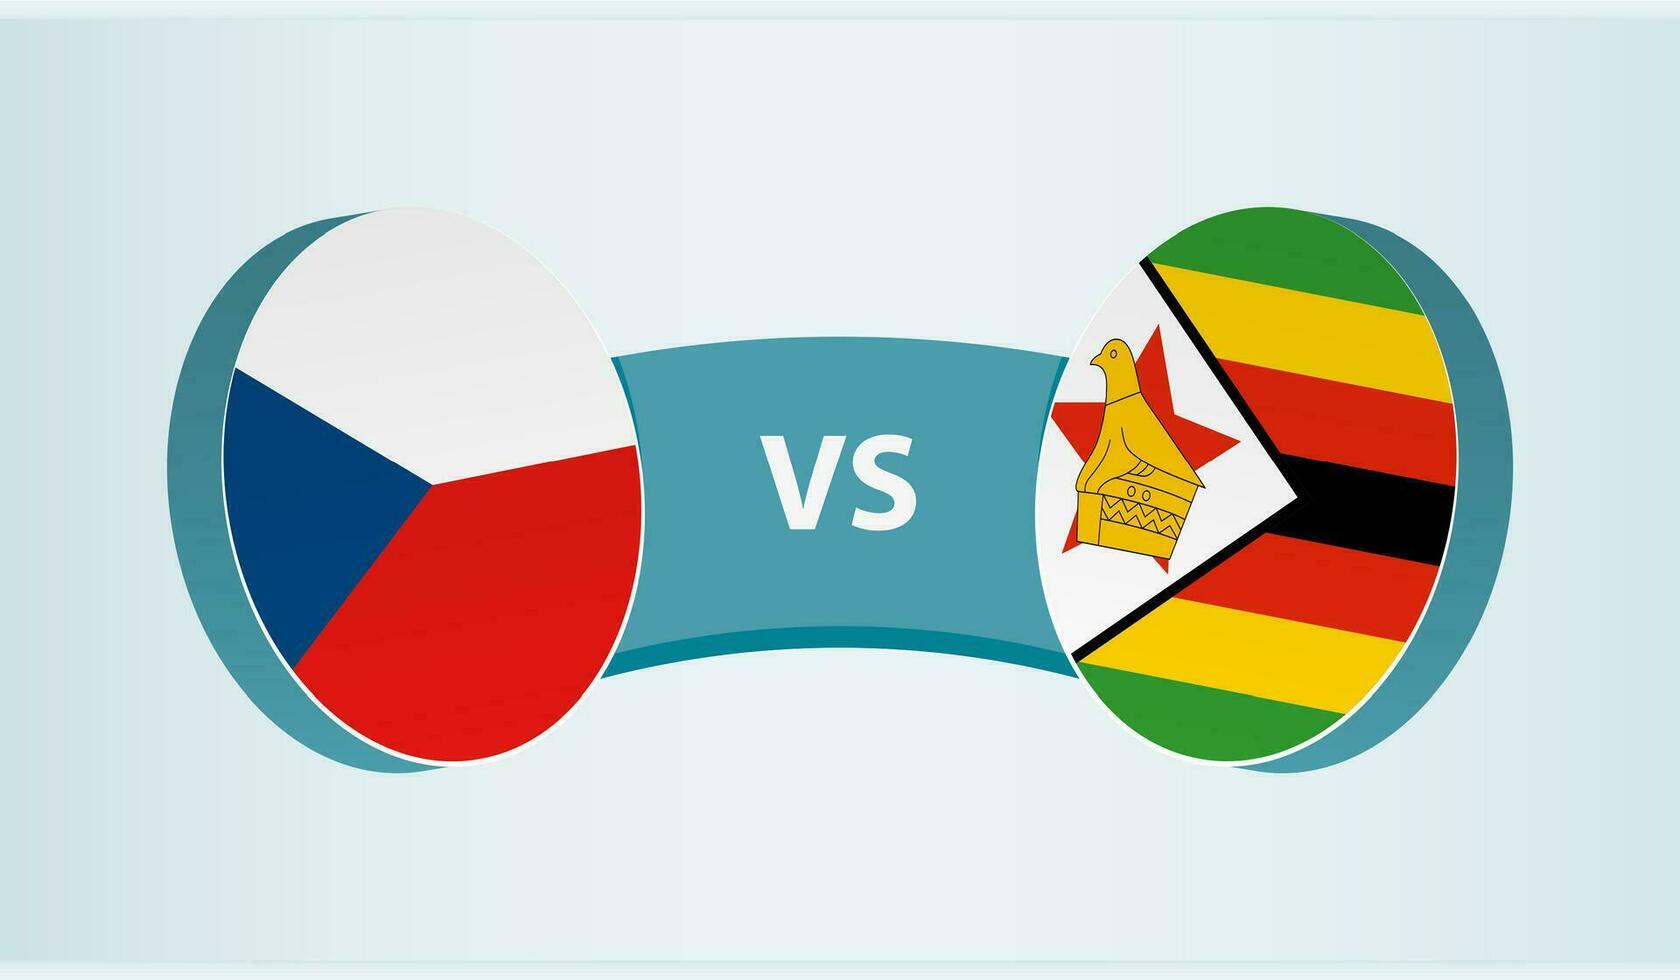 Czech Republic versus Zimbabwe, team sports competition concept. vector